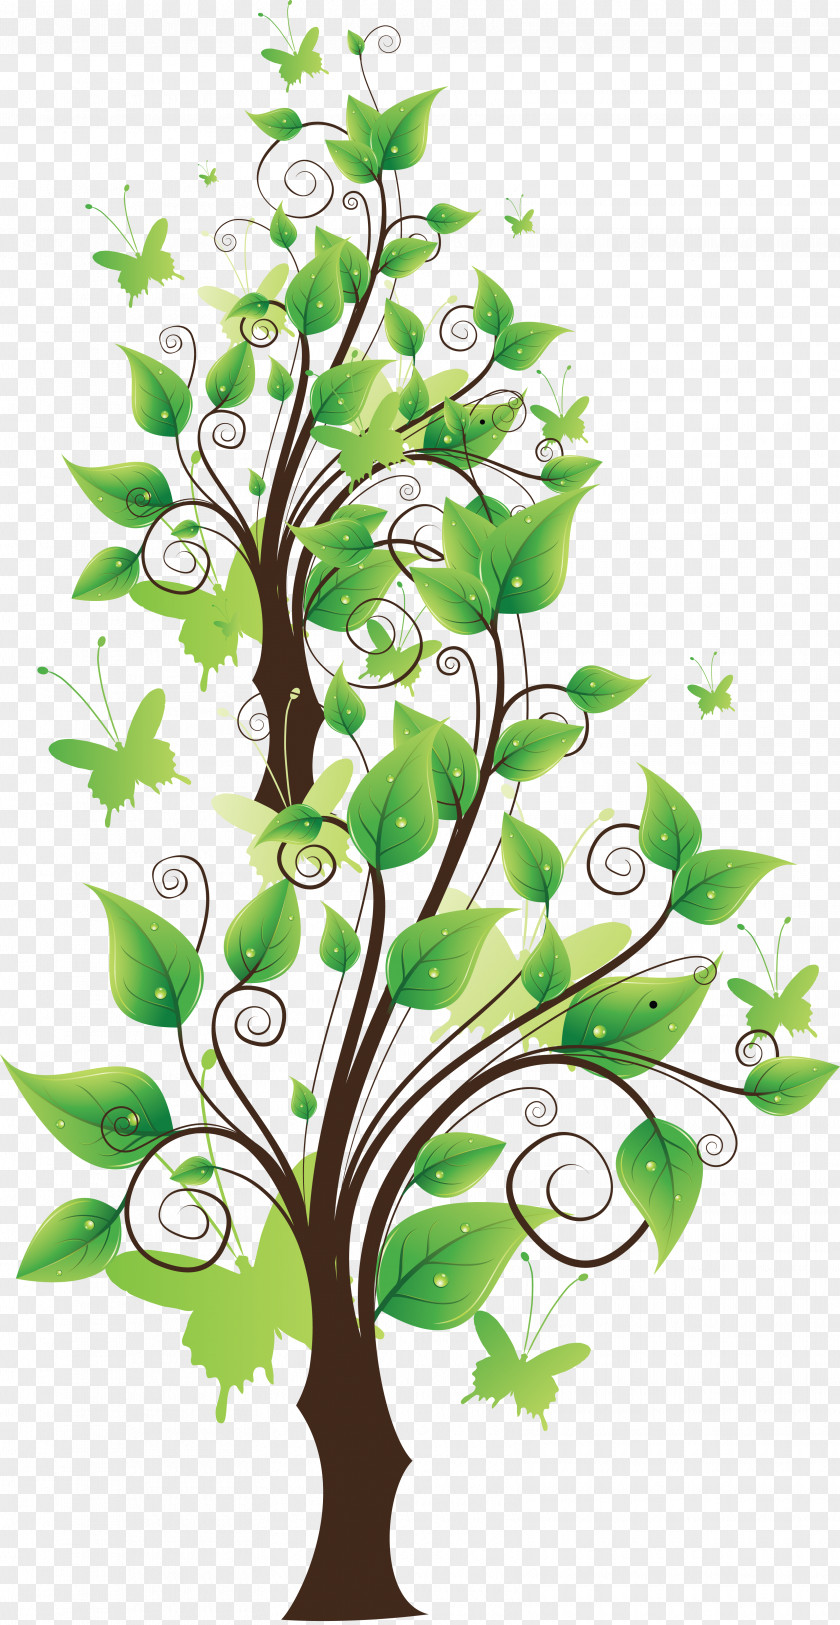 Tree Clip Art Image Vector Graphics PNG